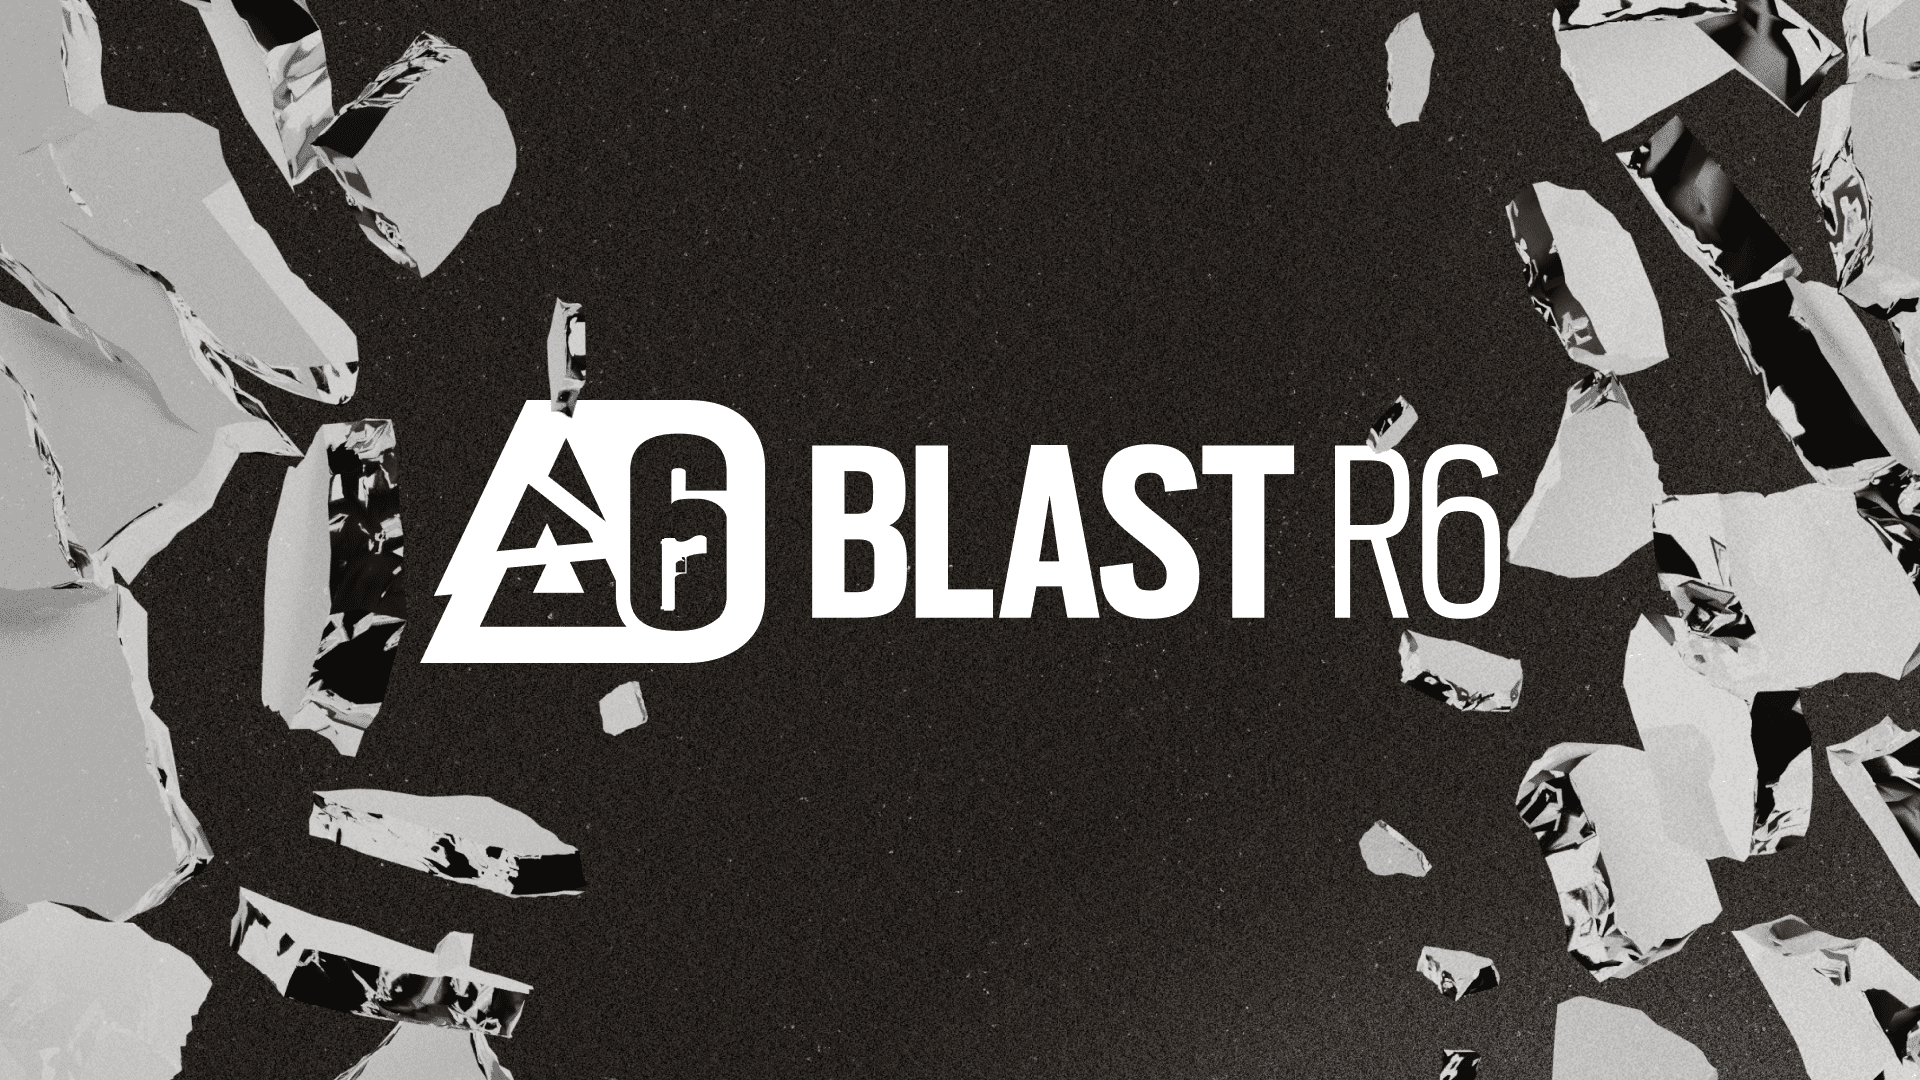 UBISOFT & BLAST เผยโฉม “BLAST R6” งานแข่งอีสปอร์ตระดับโลกครั้งใหม่สำหรับ Tom Clancy’s Rainbow Six Siege เริ่มต้น 6 มีนาคมนี้